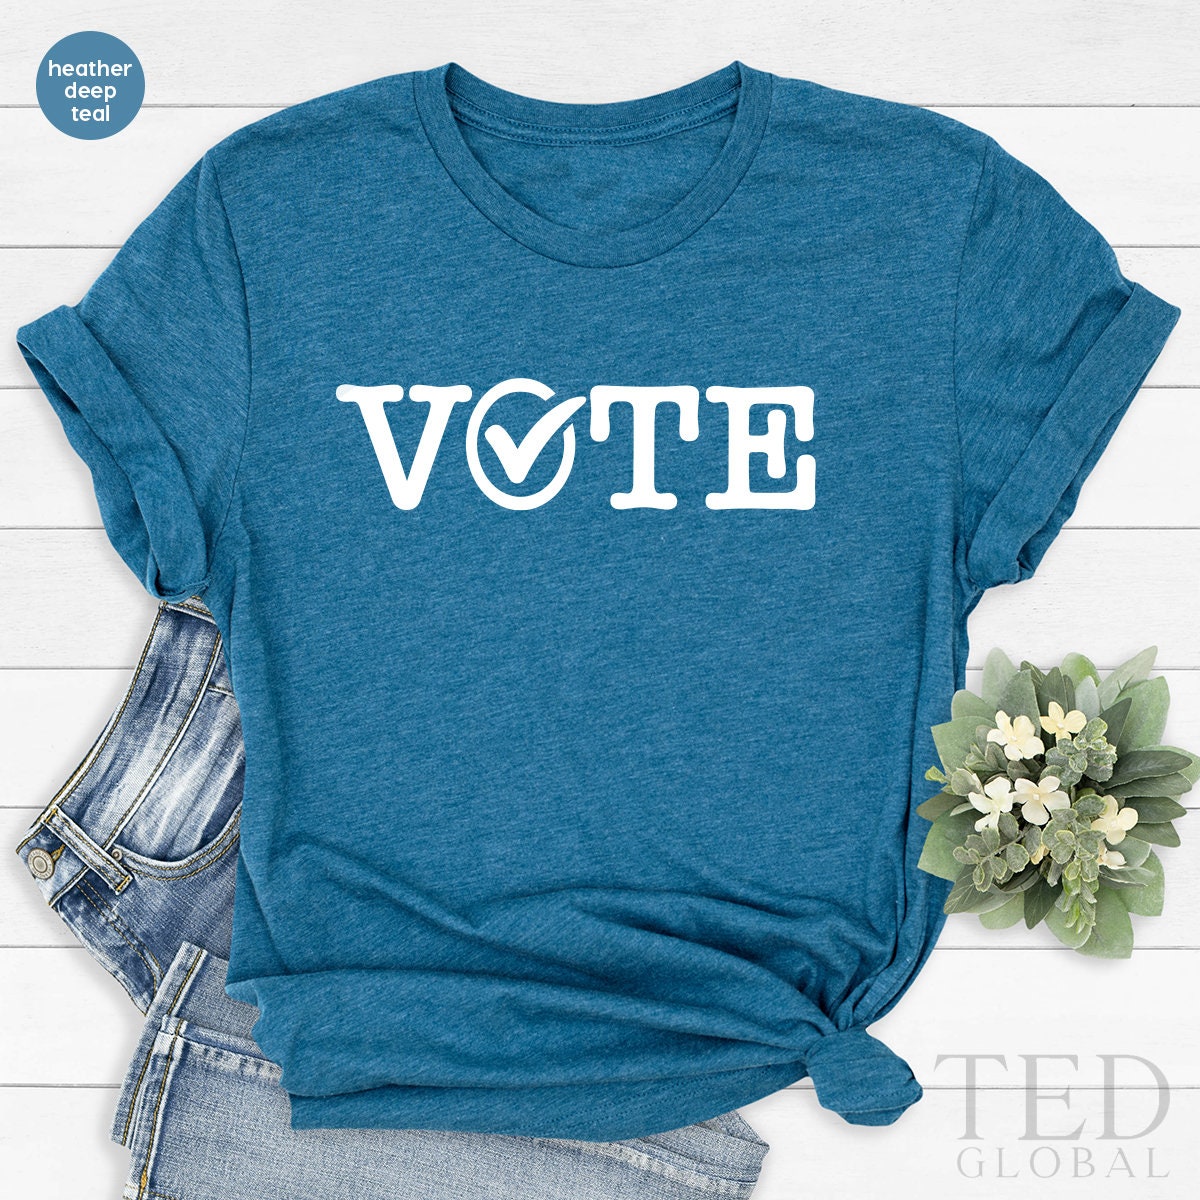 Political T-Shirt, Democracy T Shirt, Vote Shirt, Election Shirt, Democrat Friend Gifts, Voting T Shirt, Gift For Voter , Politics Tees - Fastdeliverytees.com